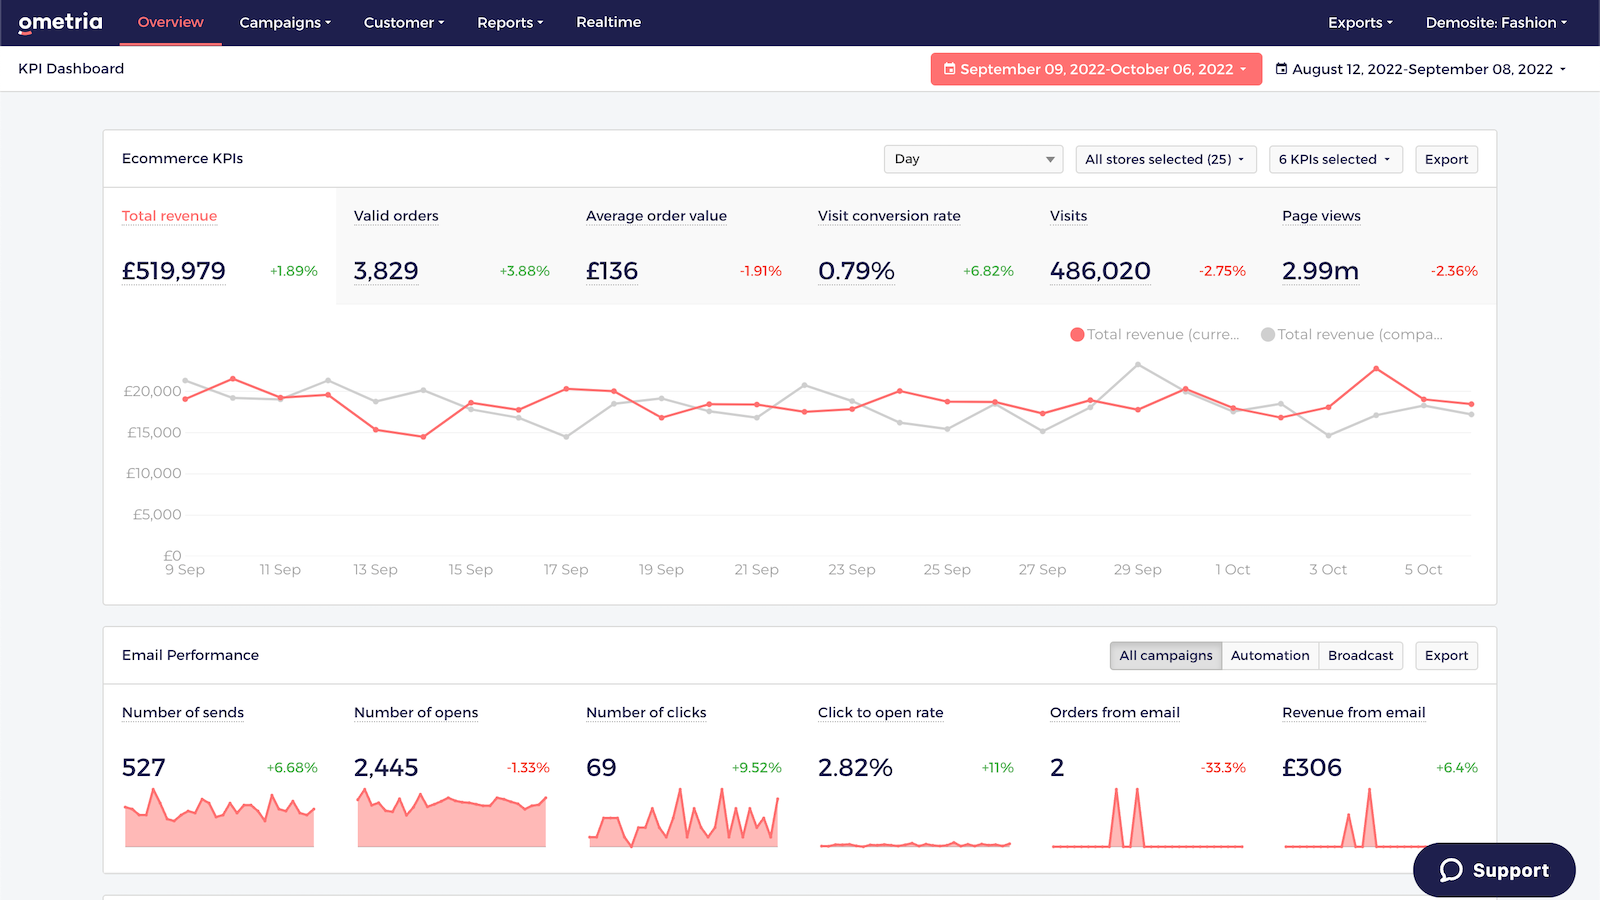 Screenshot of the Ometria platform showing reporting metrics